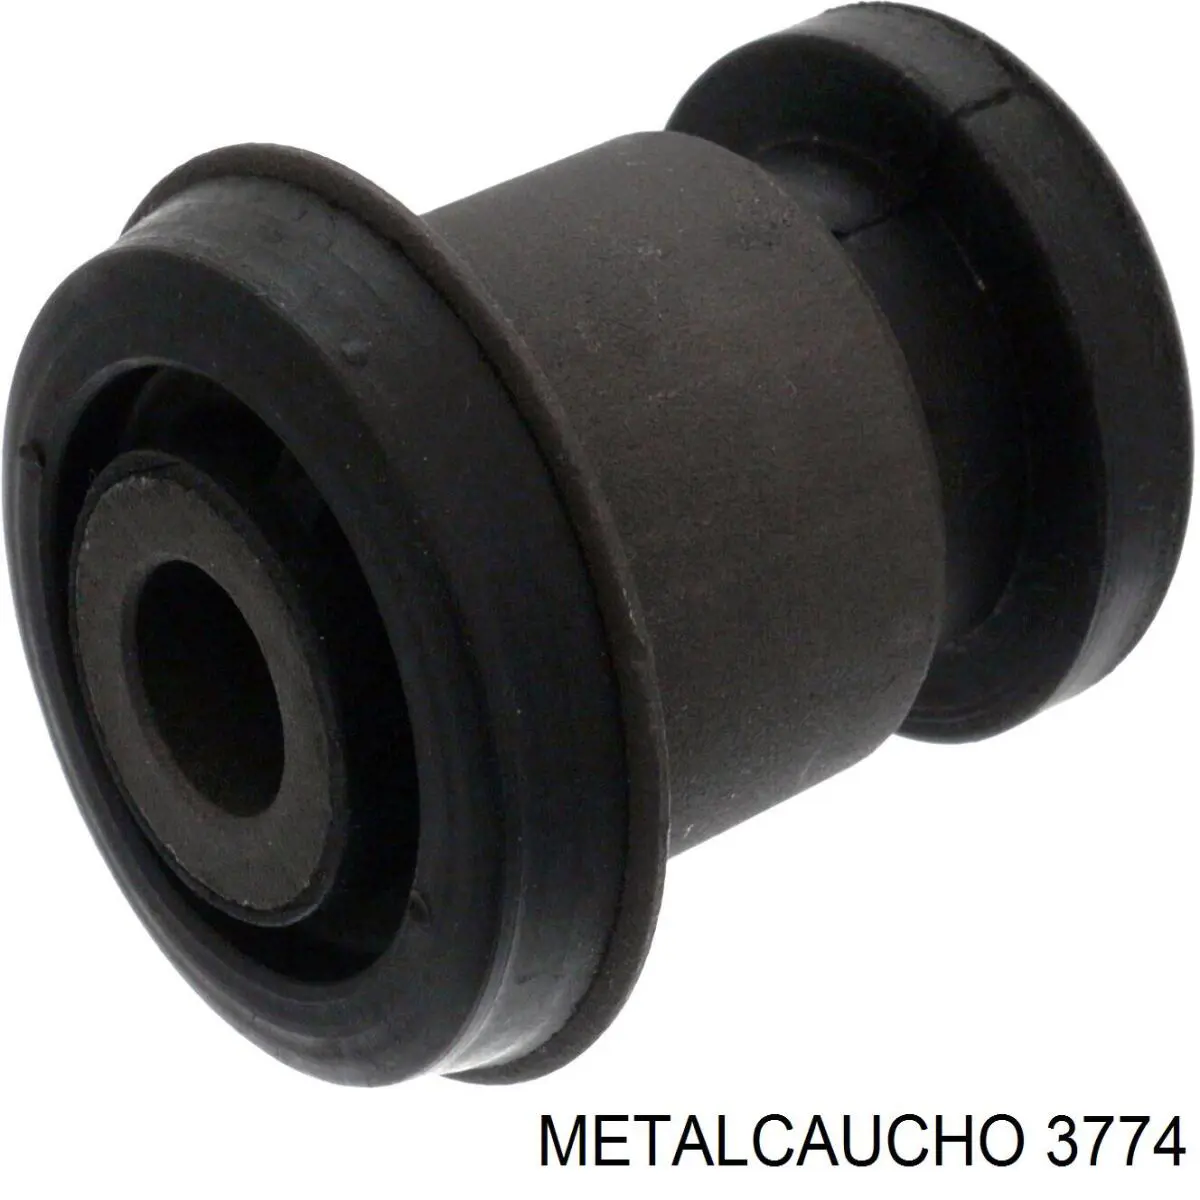 3774 Metalcaucho термостат